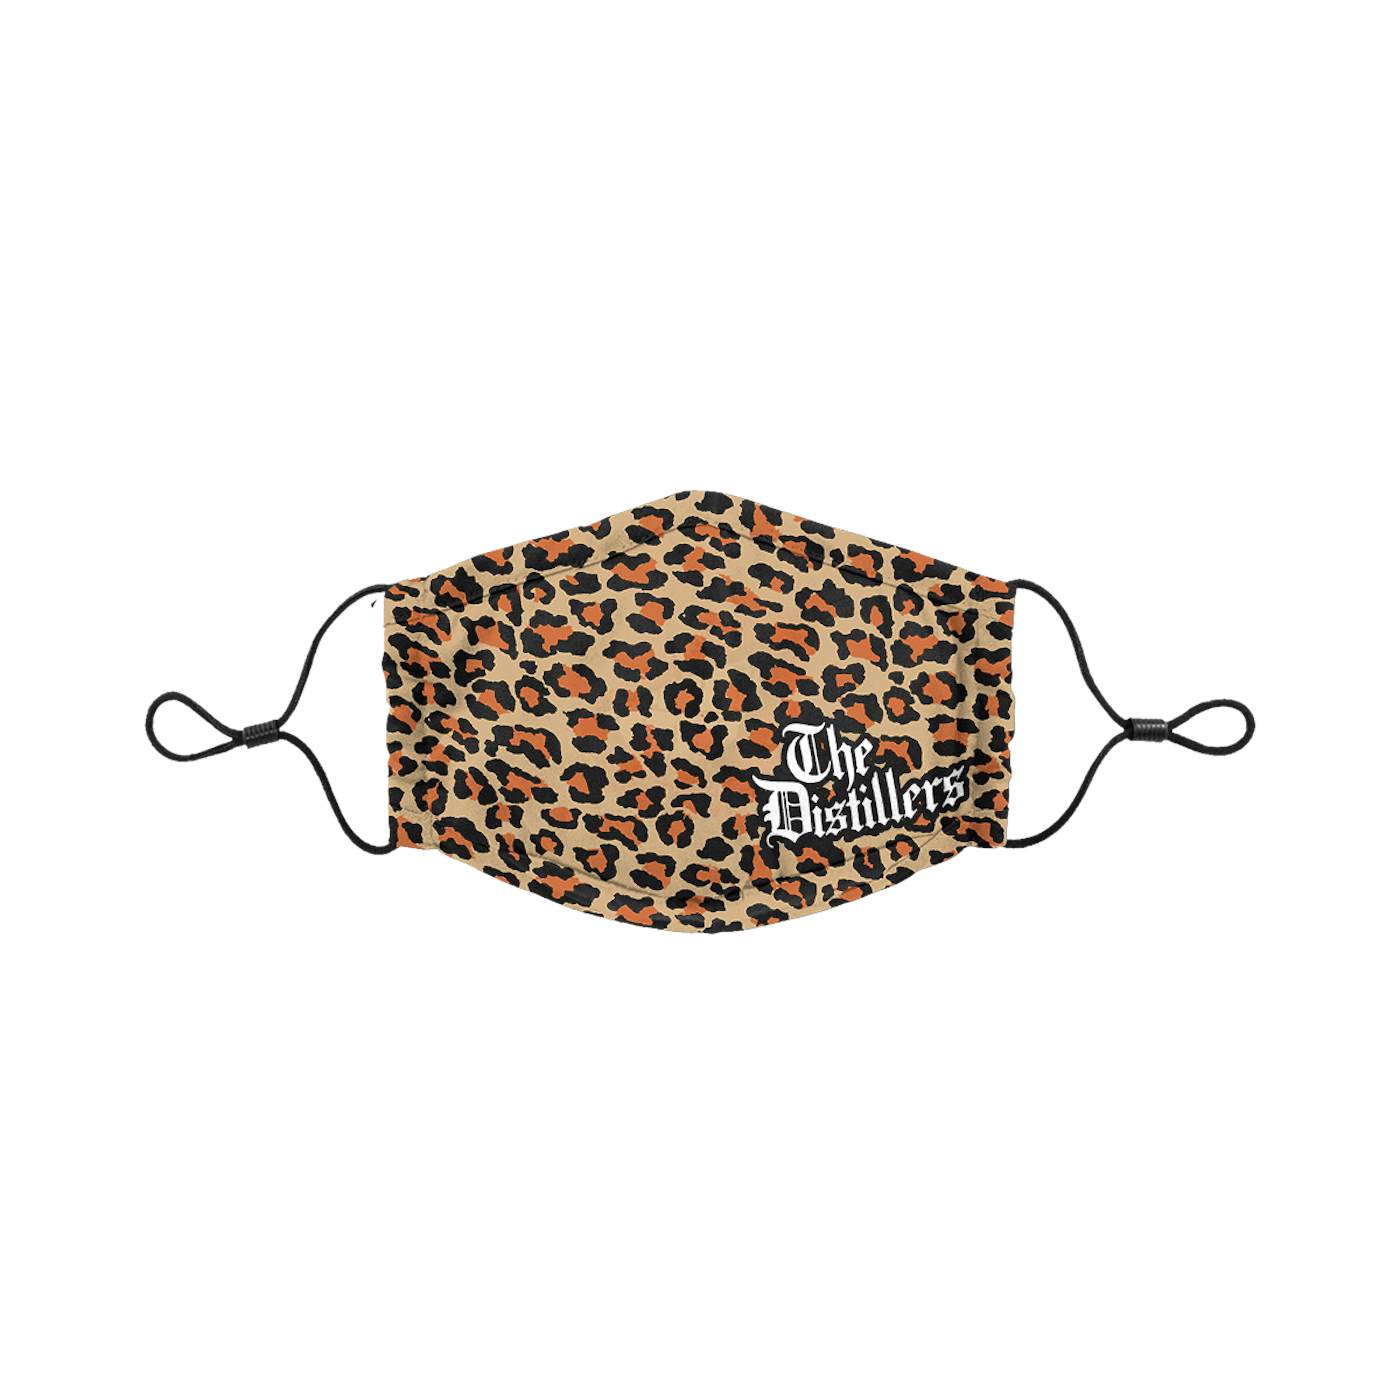 The Distillers Leopard Logo Face Mask